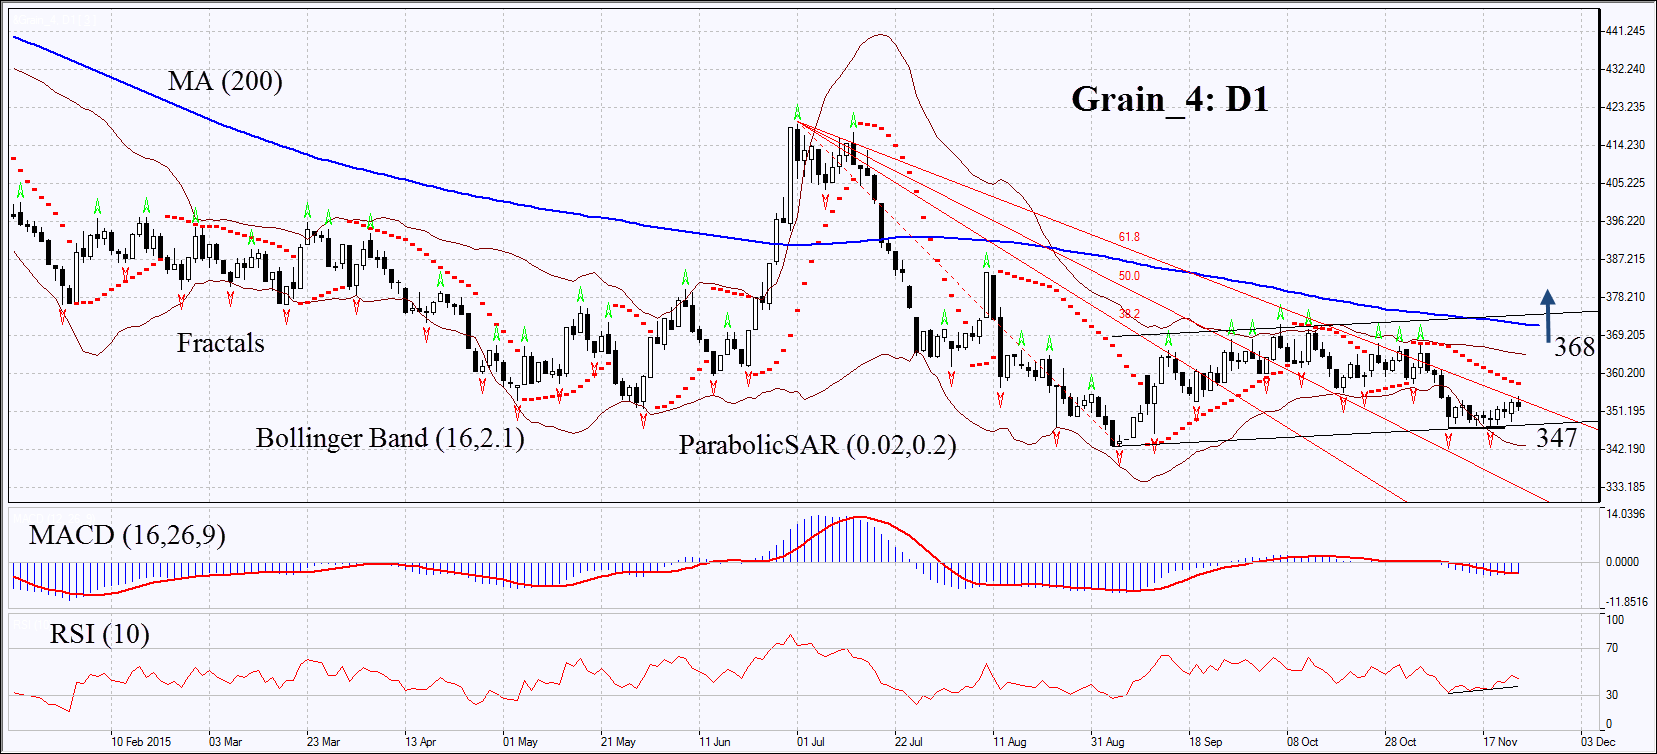 Grain_4 Daily Chart